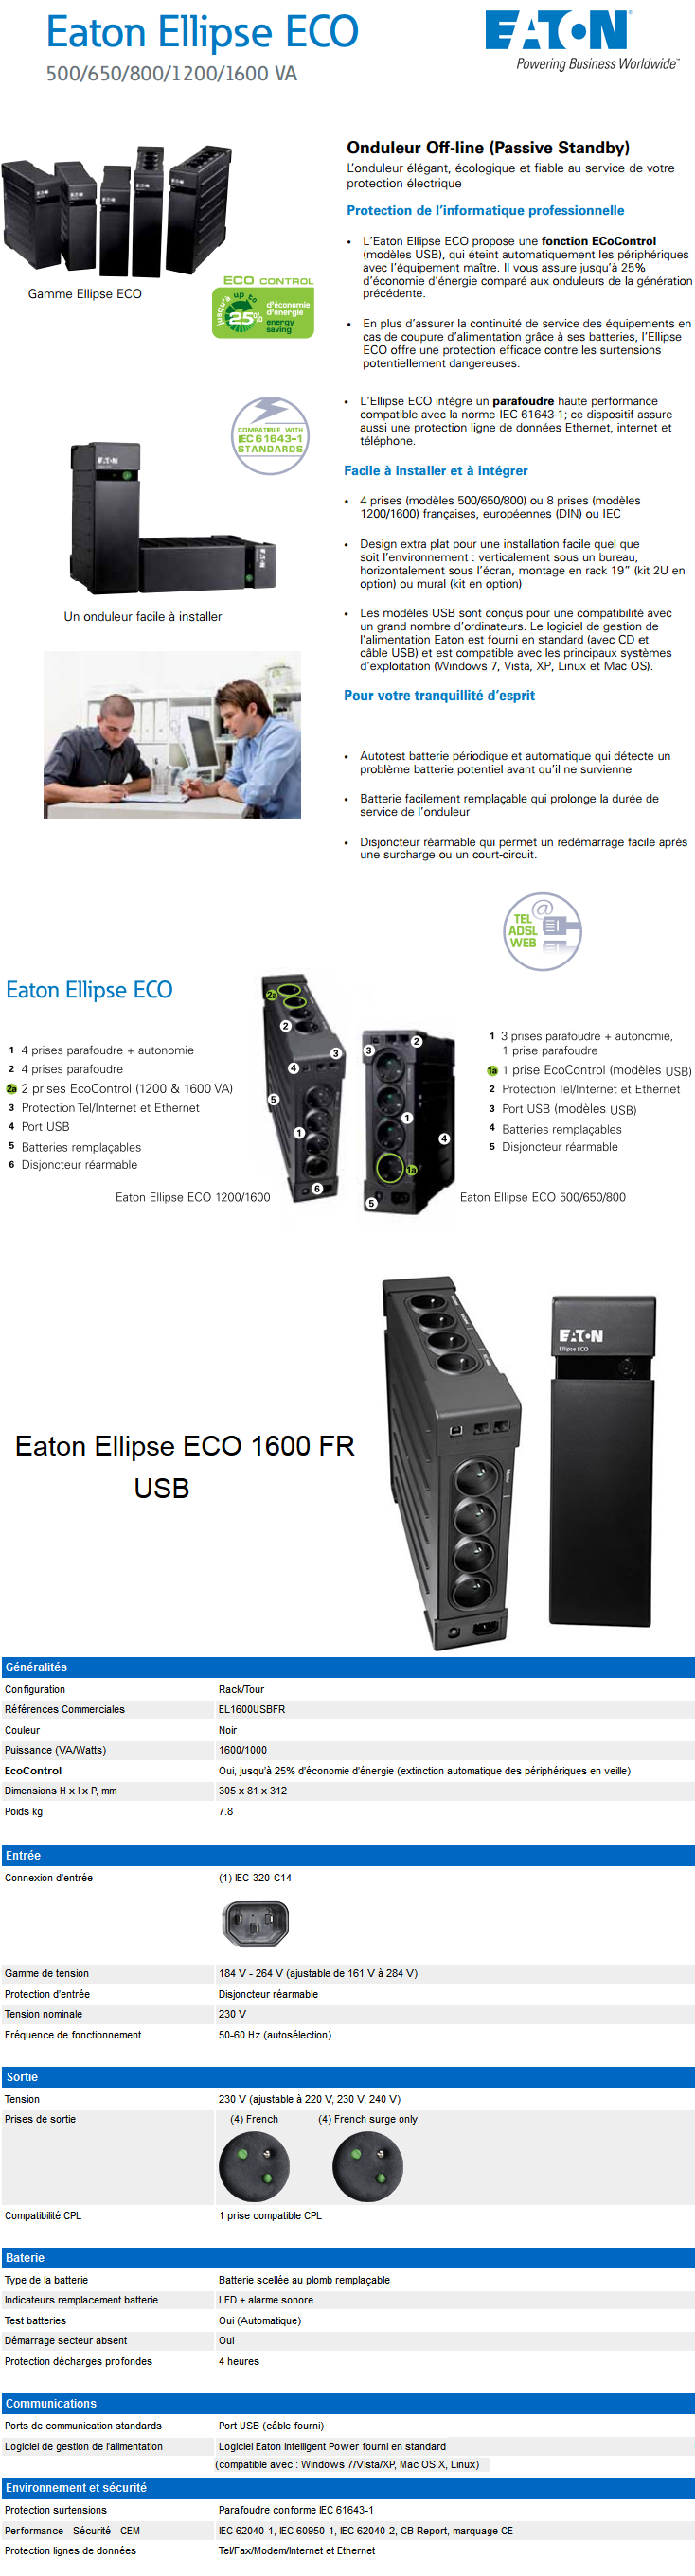 Acheter Onduleur OFF-Line Eaton Ellipse ECO 1600 FR USB (EL1600USBFR) maroc